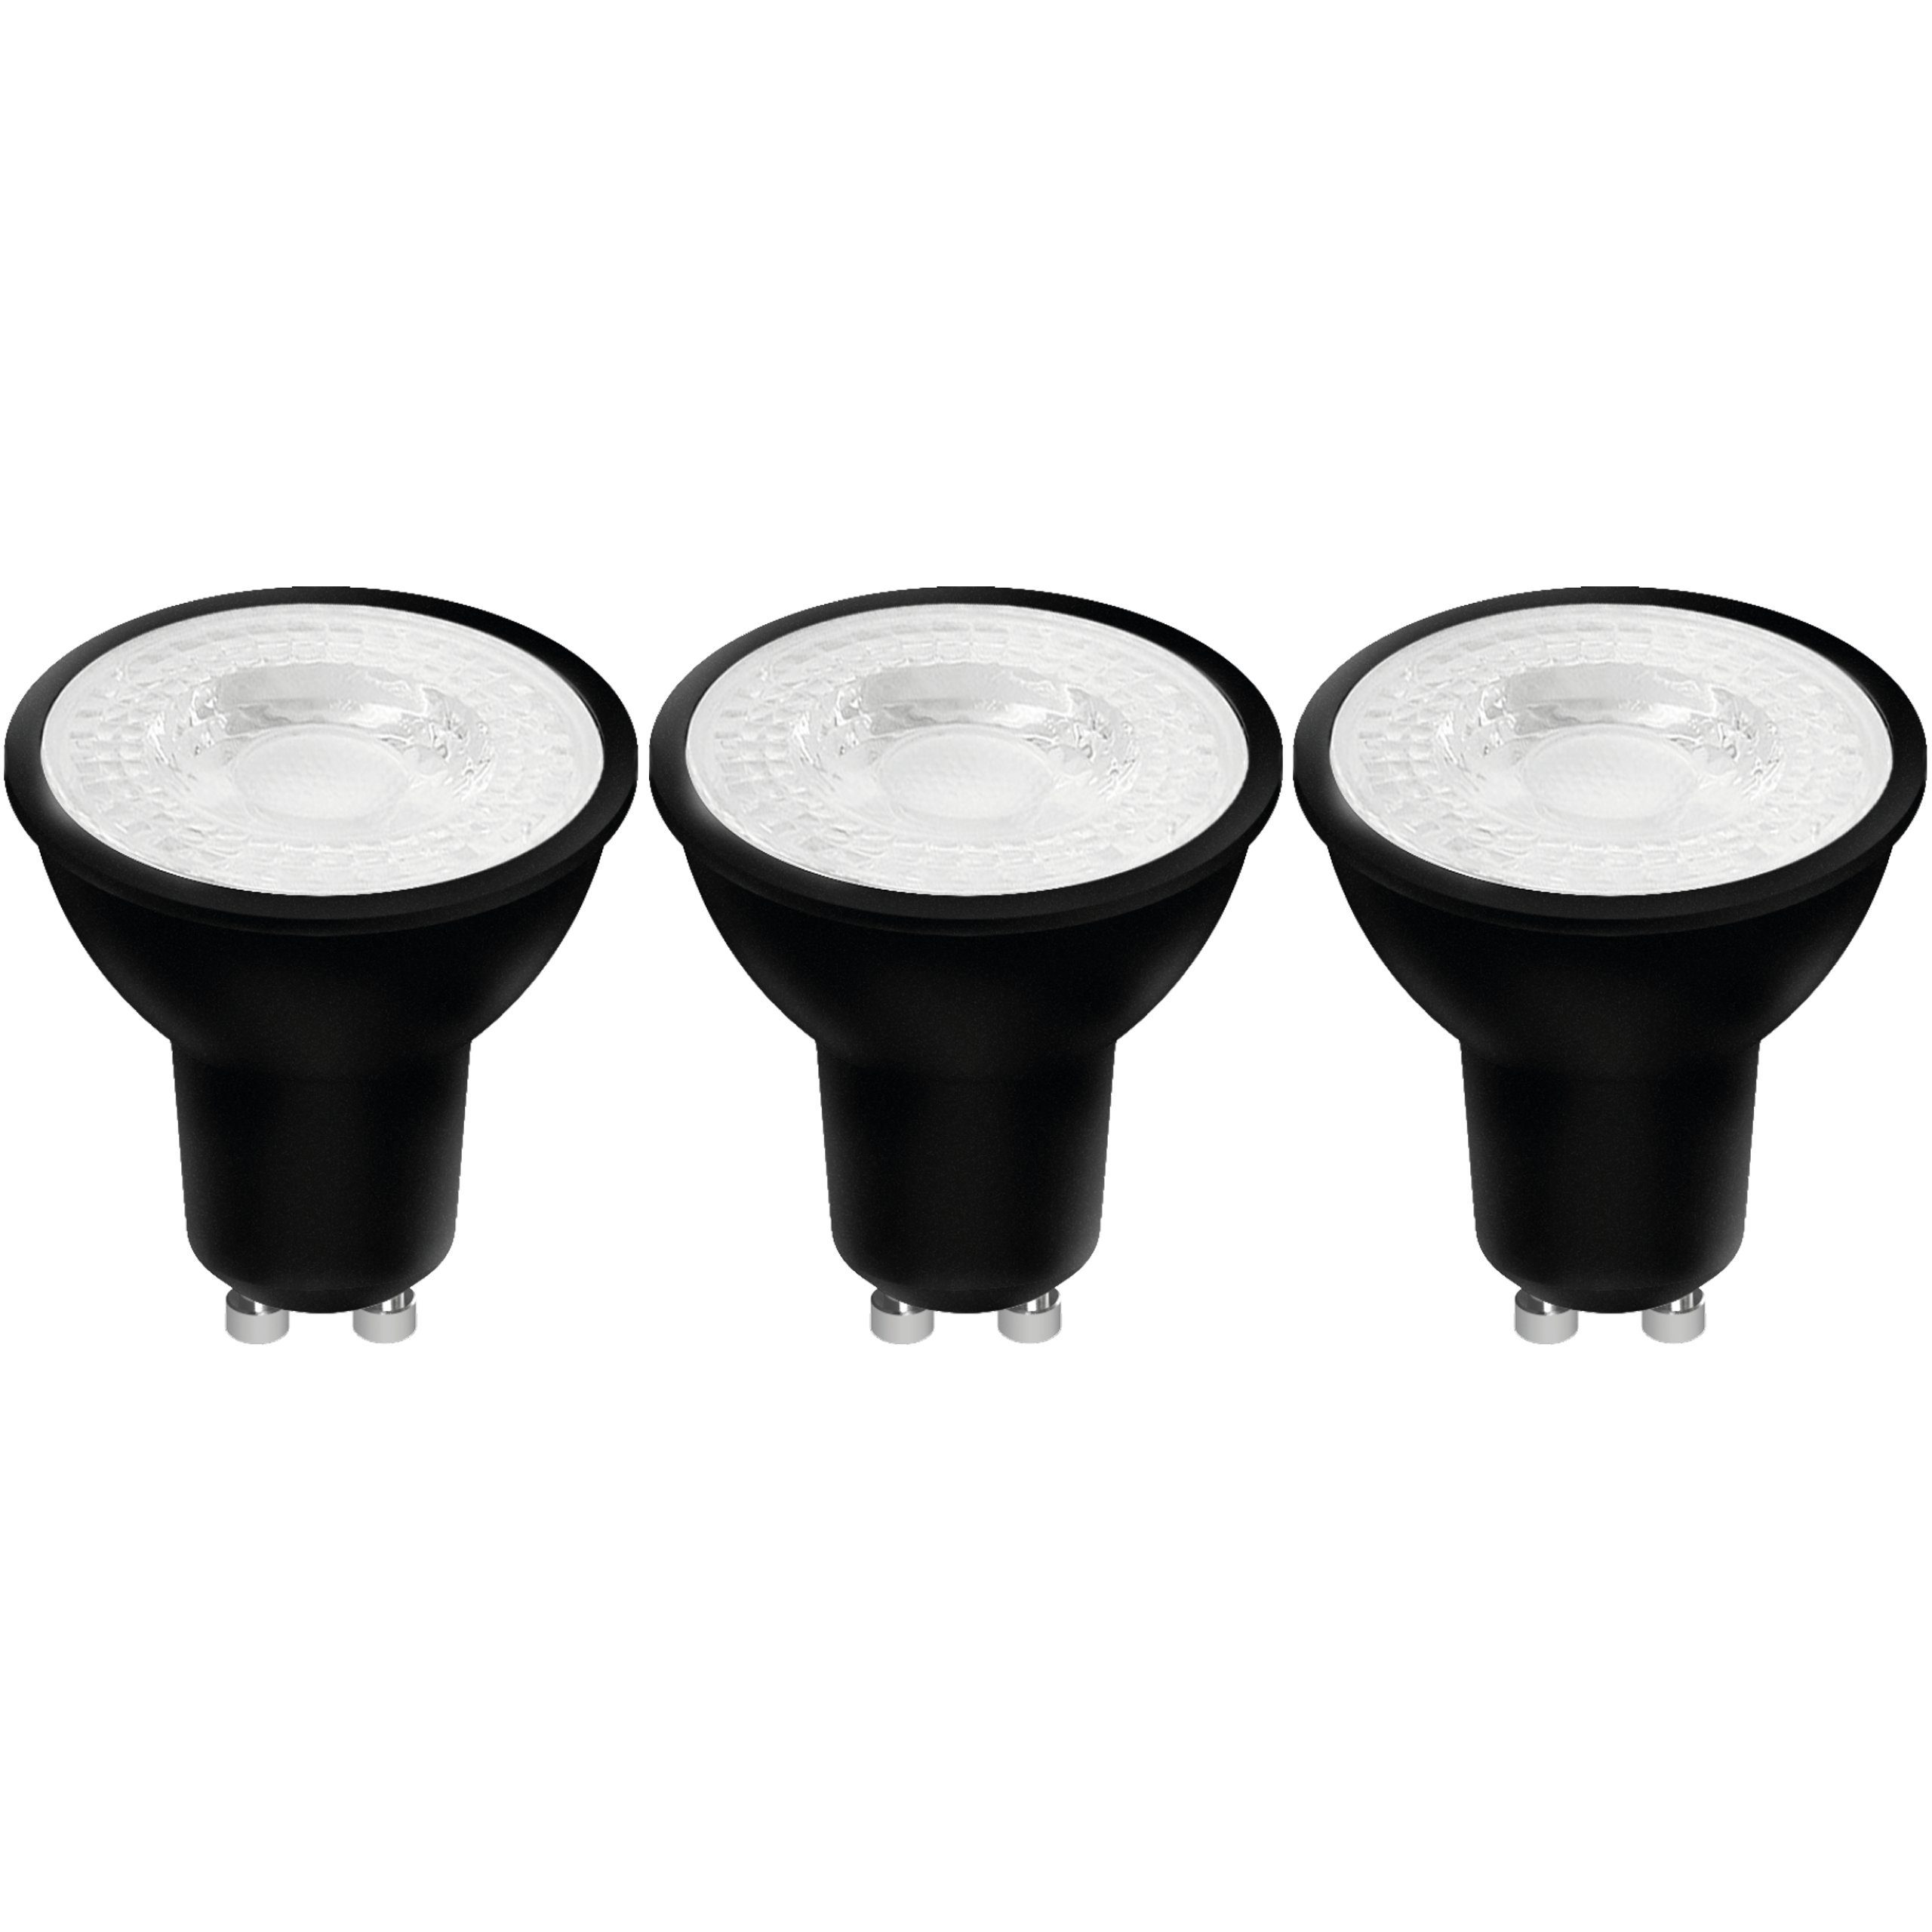 LED's light LED-Leuchtmittel 0620175 LED Spot, GU10, GU10 4,0W warmweiß Klar matt schwarz MR16 3-Pack